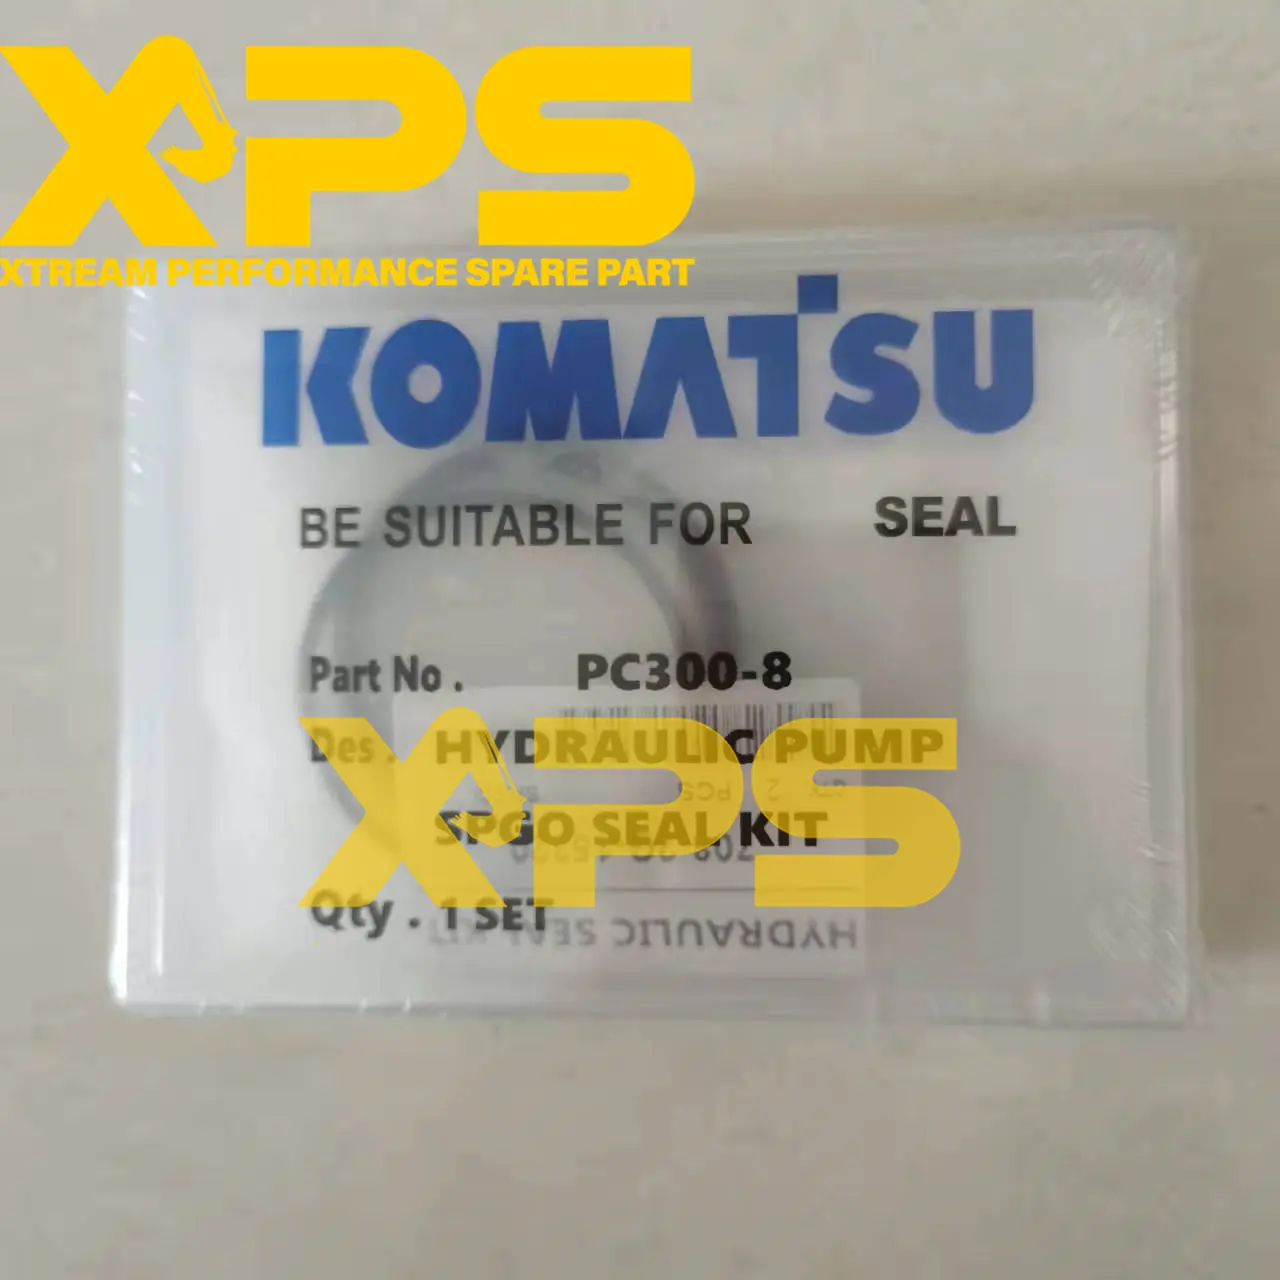 XPSEAL Hydrualic SPGO ختم كيت PC230-6 التحكم صمام ختم كيت hydrualic مضخة spgo ختم كيت ل كوماتسو pc200-8 pc300-8 pc350-8